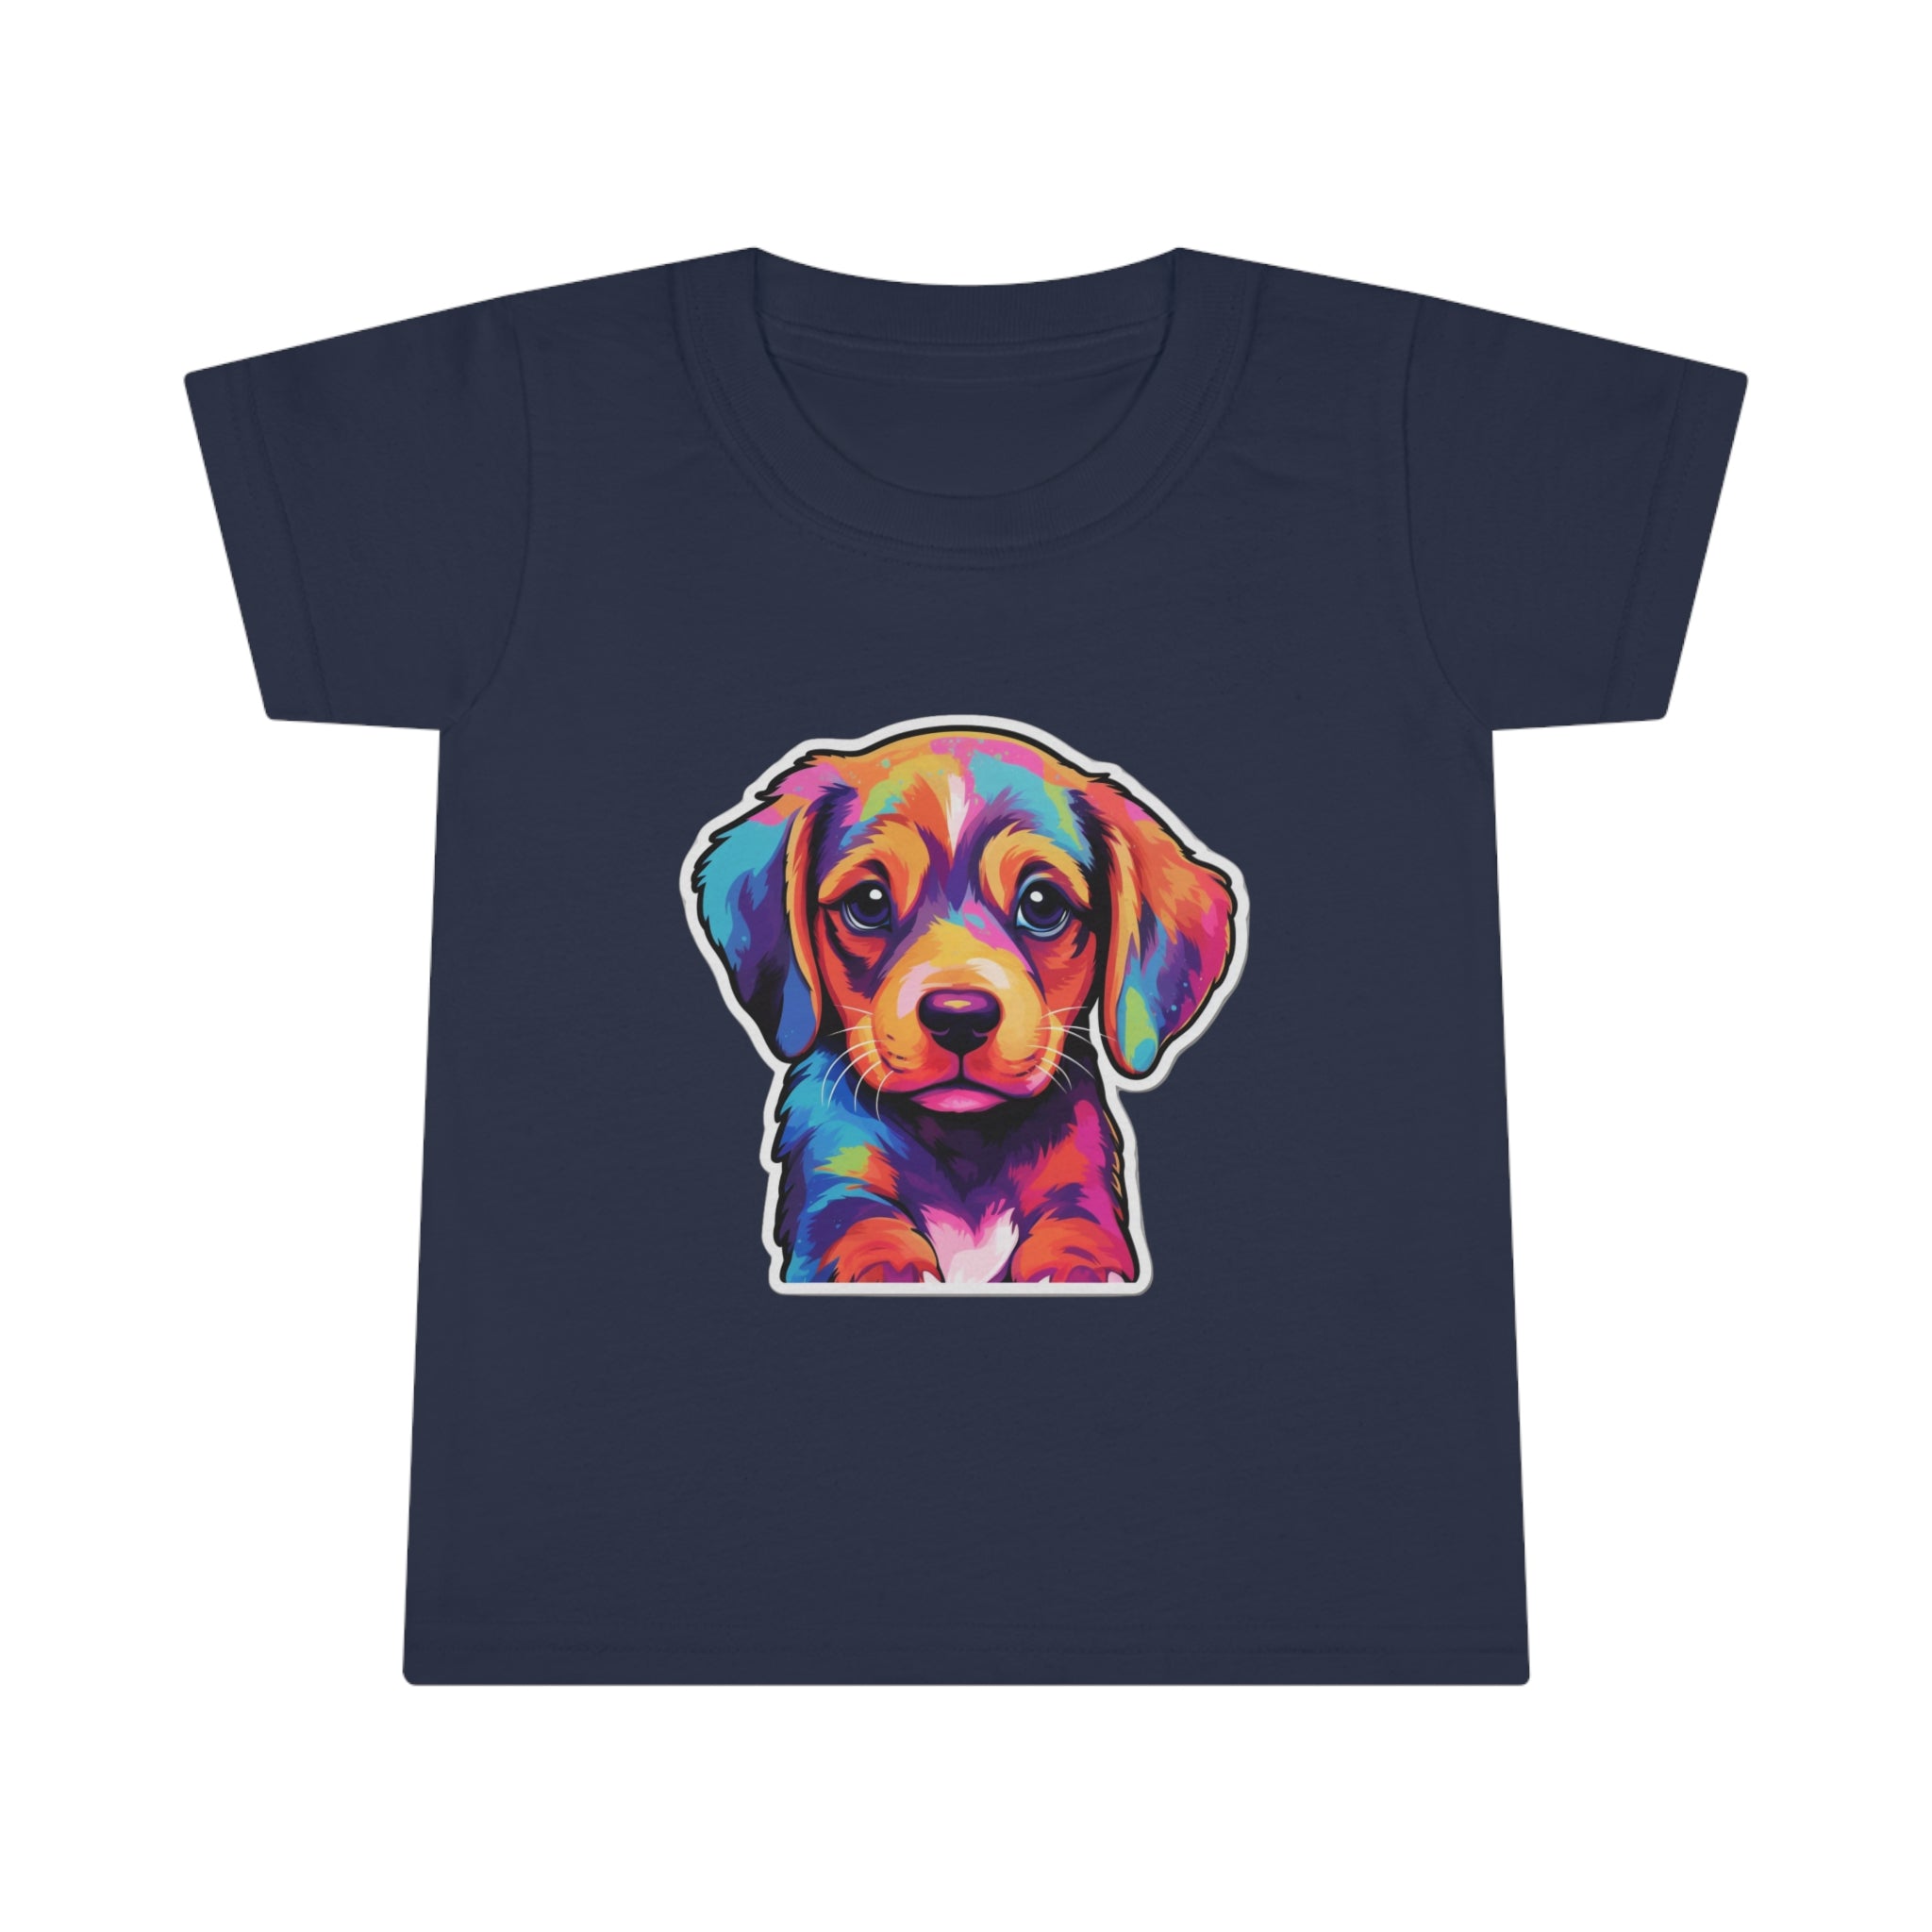 Toddler T-shirt - Puppies 05